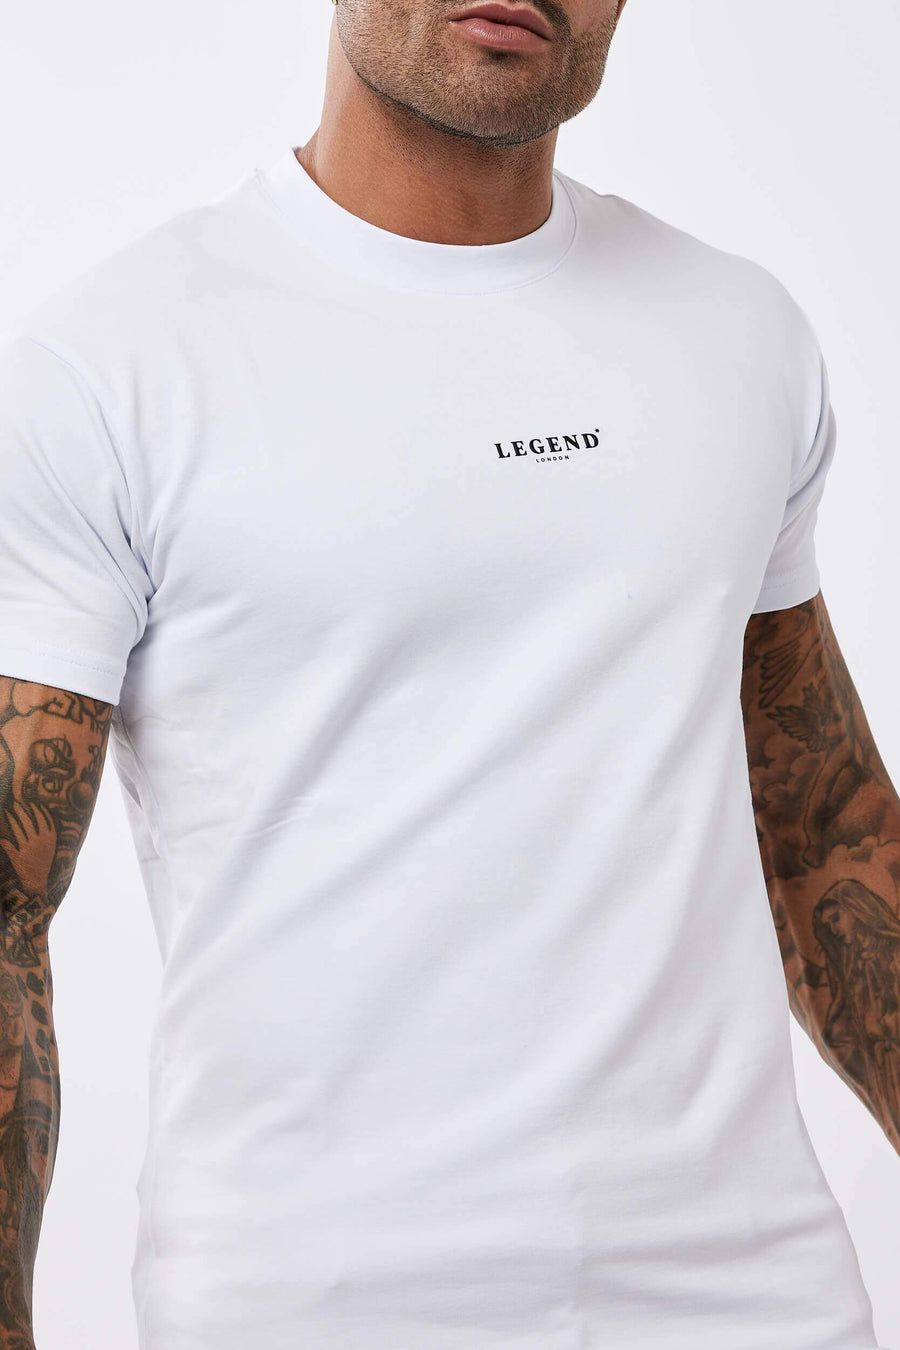 Legend London Tshirts CENTER LOGO T-SHIRT - WHITE